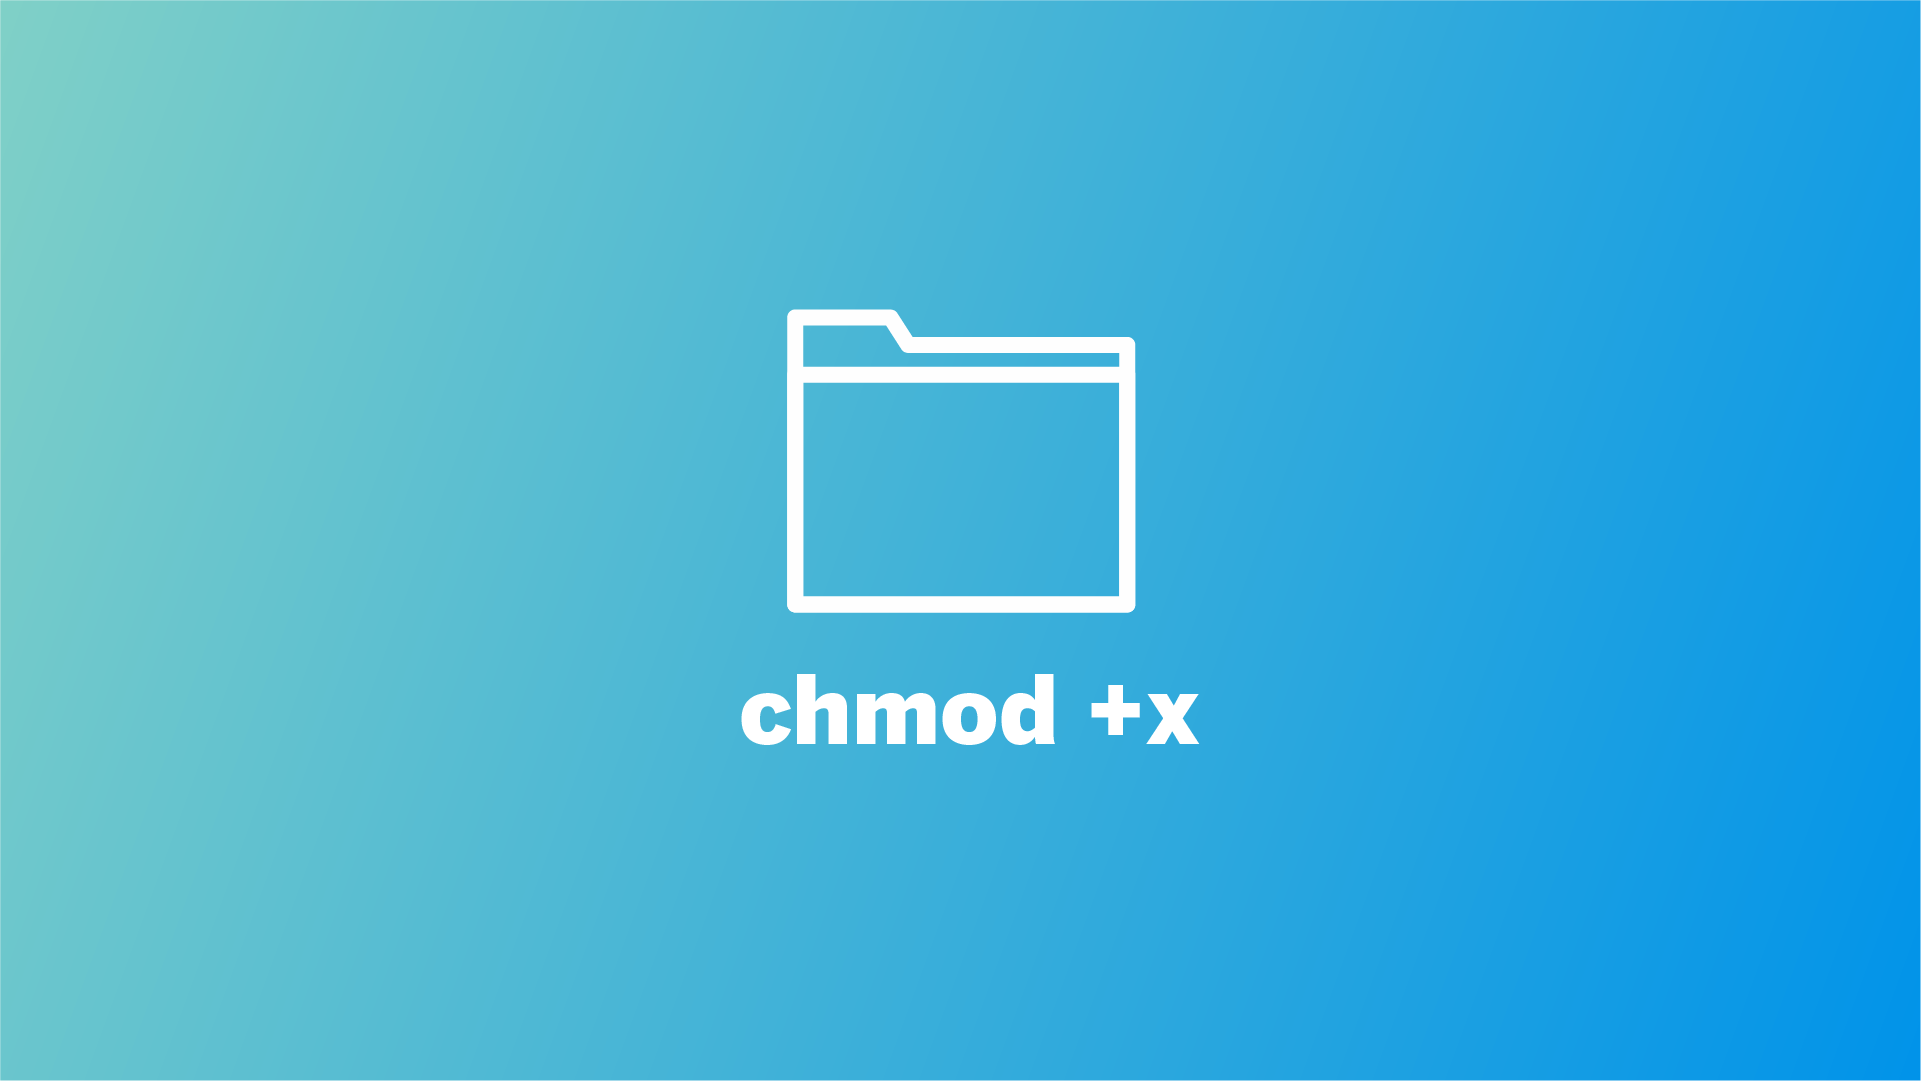 chmod +x command